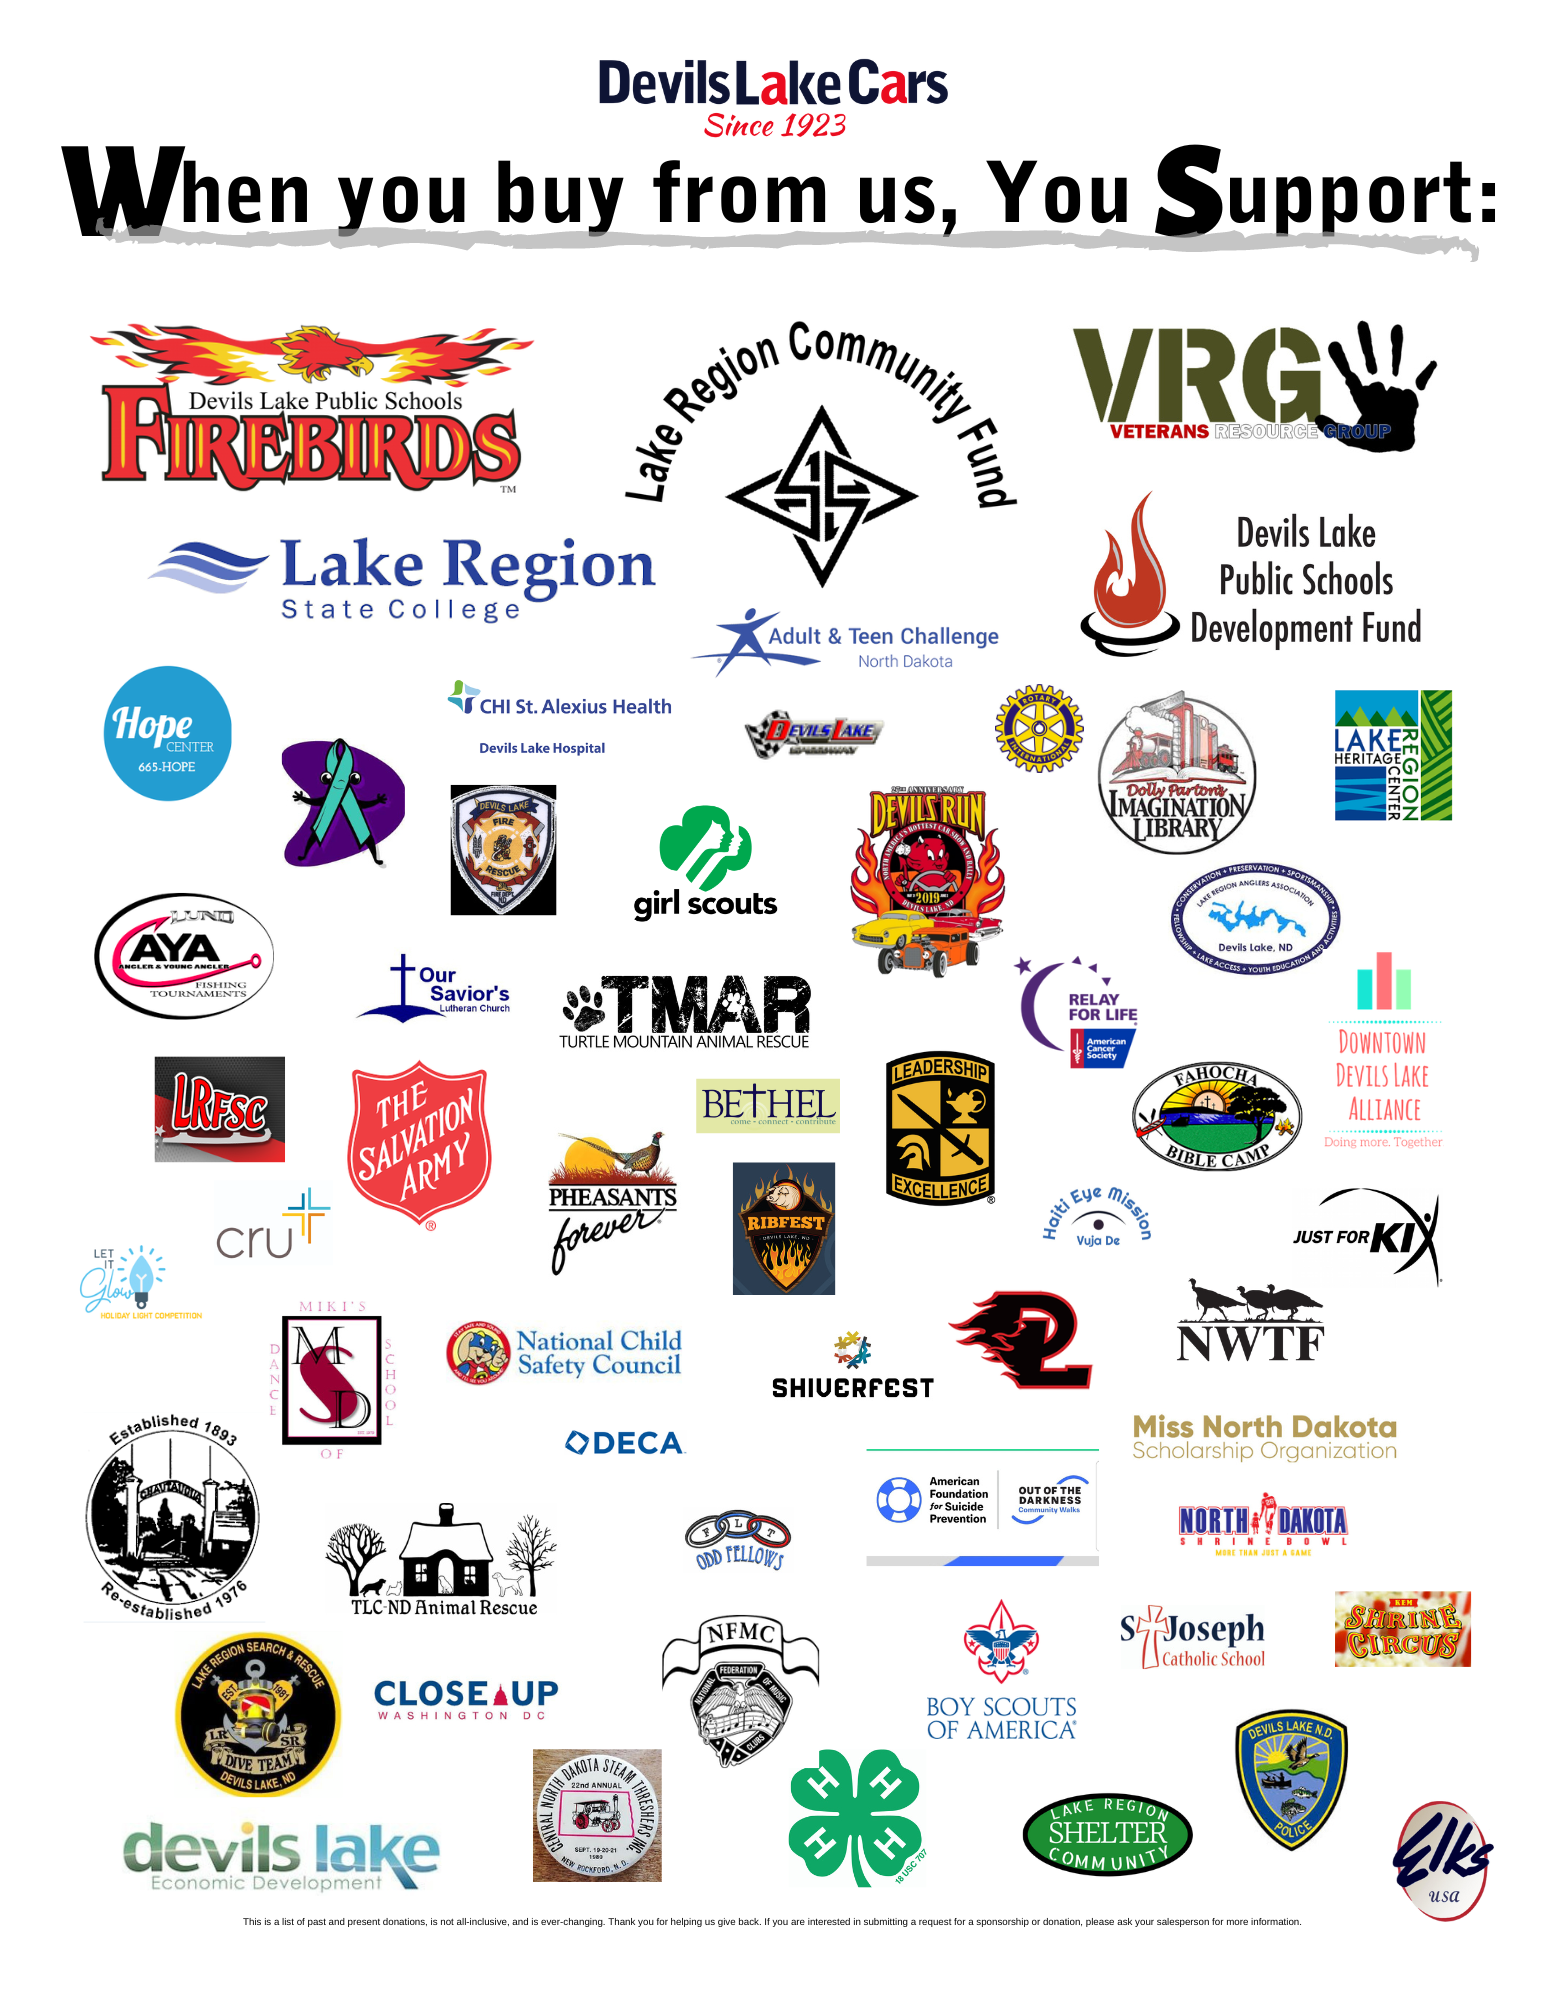 Programs we support at Devils Lake Ford in Devils Lake ND